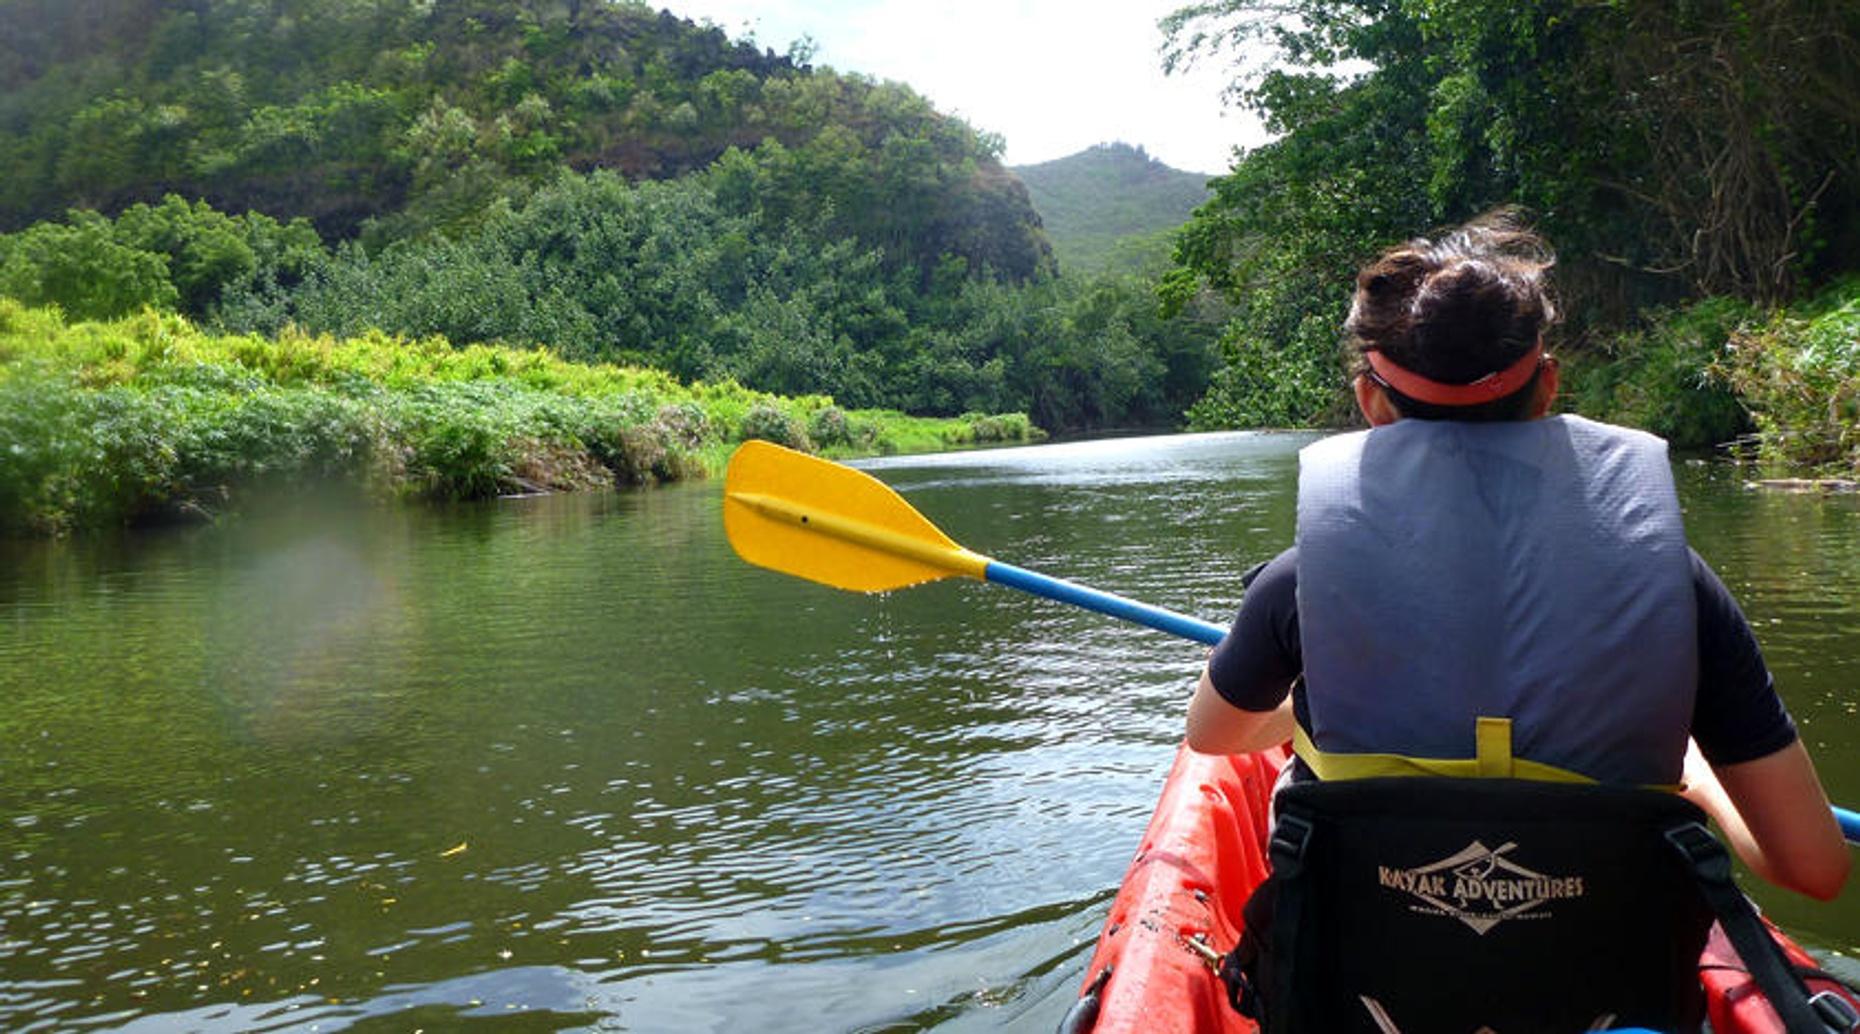 Kayak Rental in Cape Island Creek